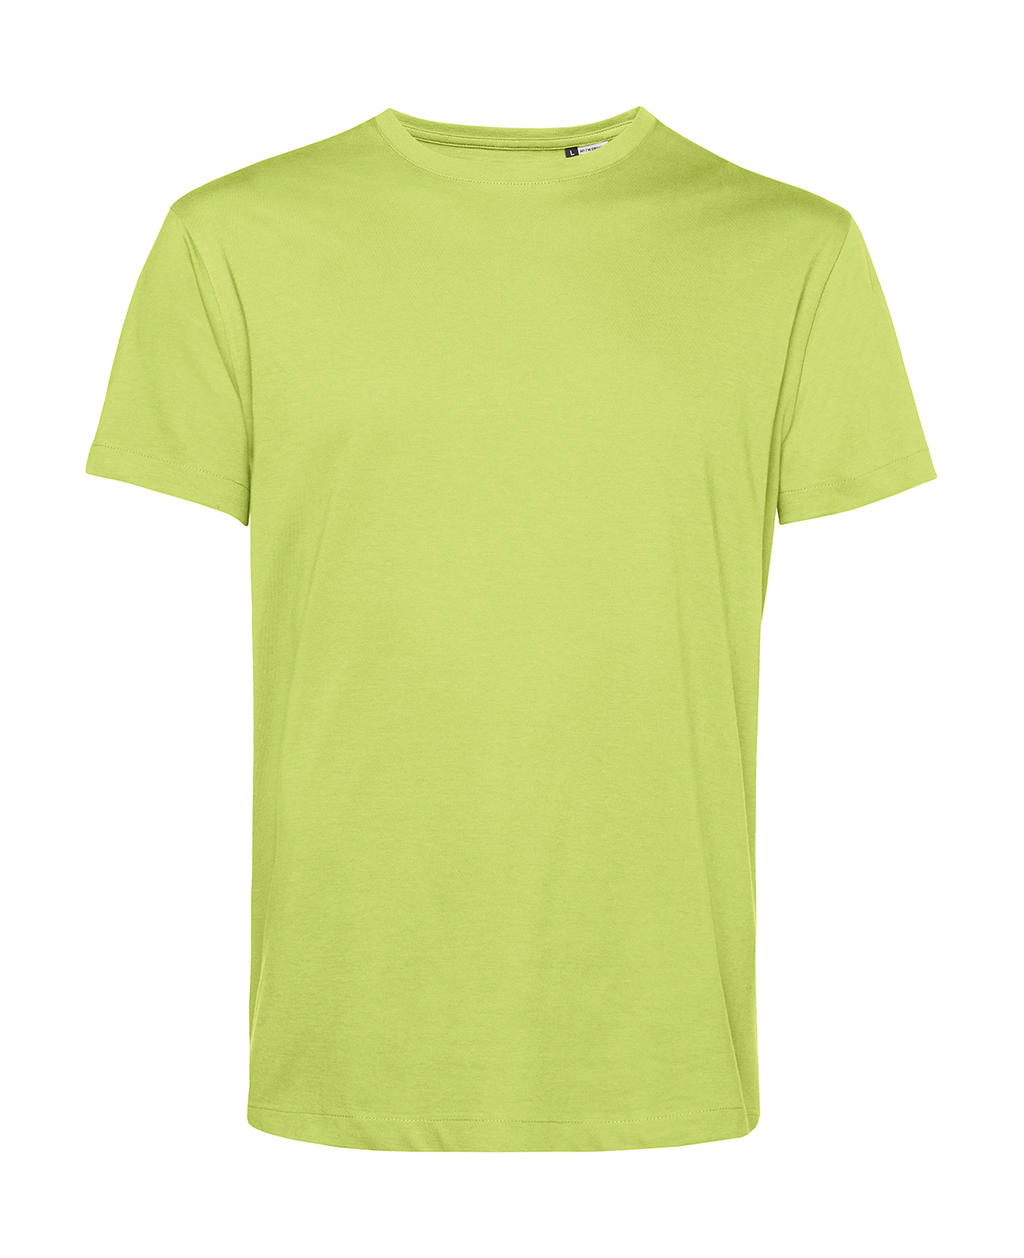 Tričko BC Organic Inspire E150 - světle zelené, XL